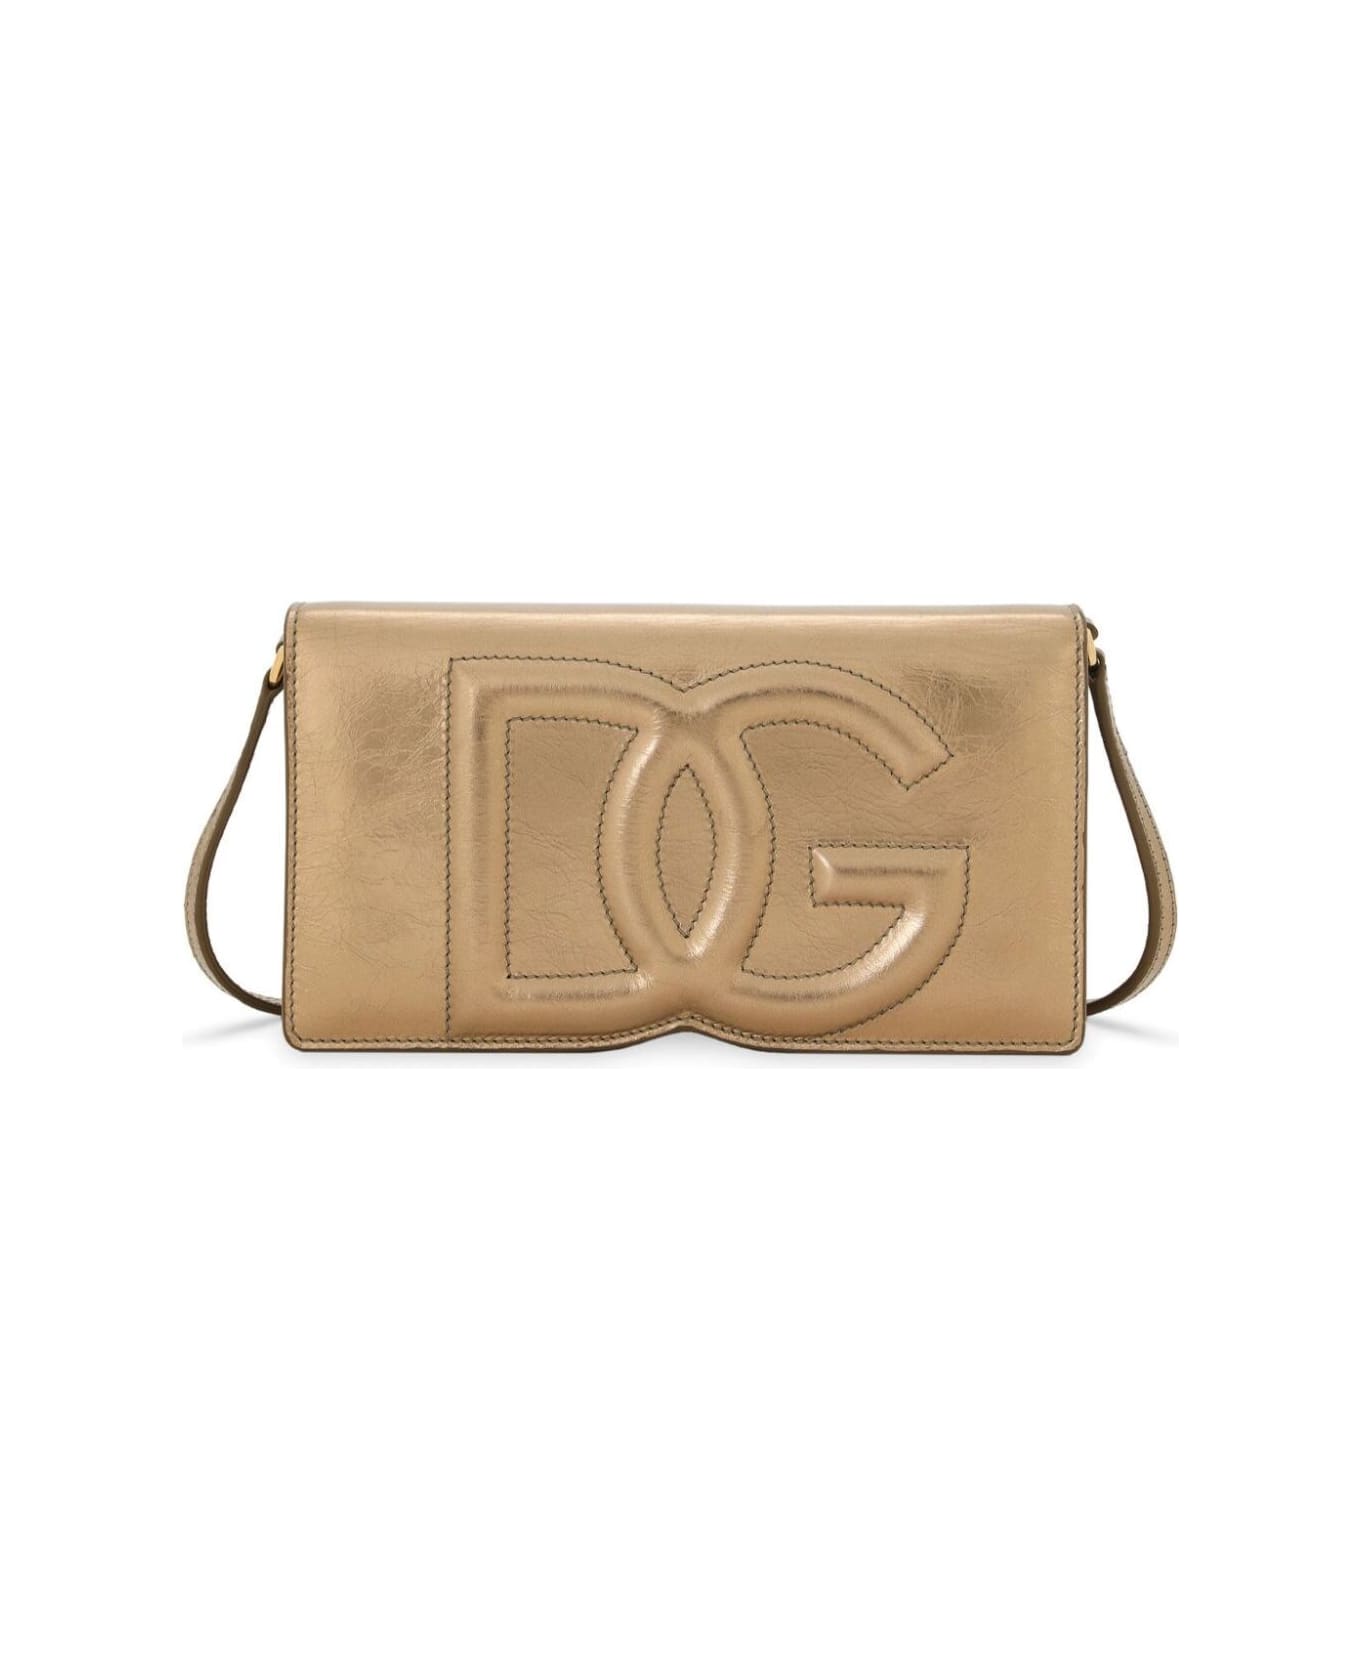 Dolce & Gabbana Phone Bag Vit.cracle'lame' - Metallic クラッチバッグ